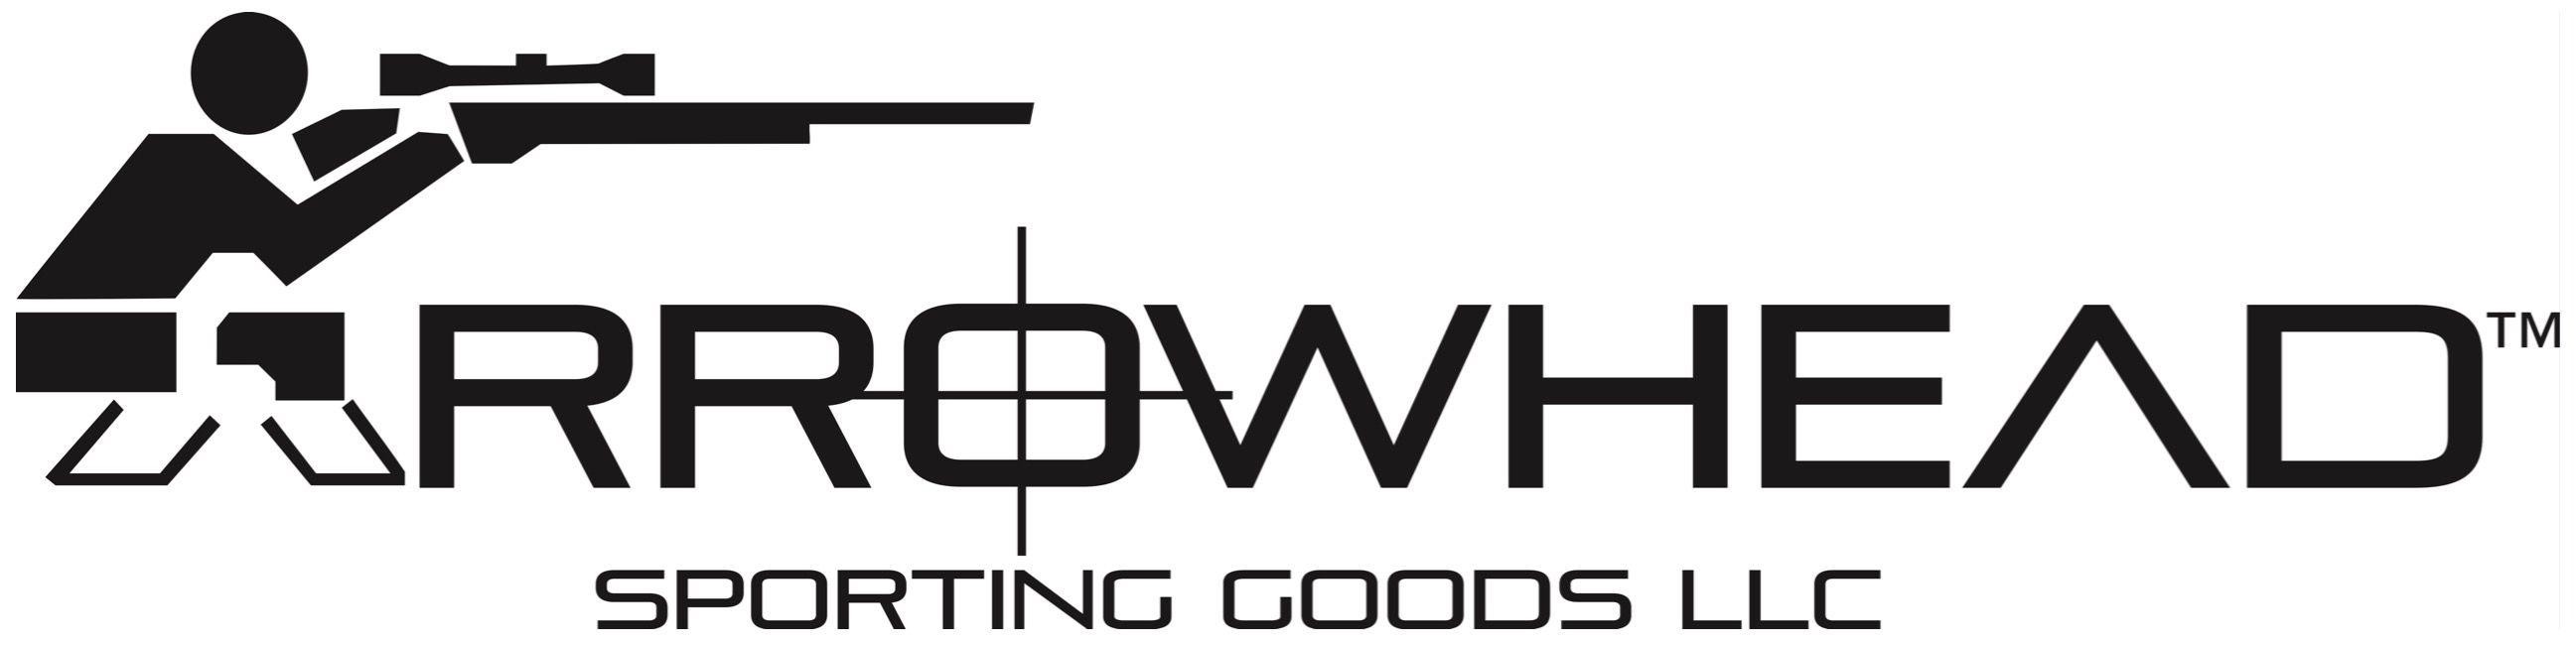 Arrowhead Sports Logo - Arrowhead Sporting Goods LLC